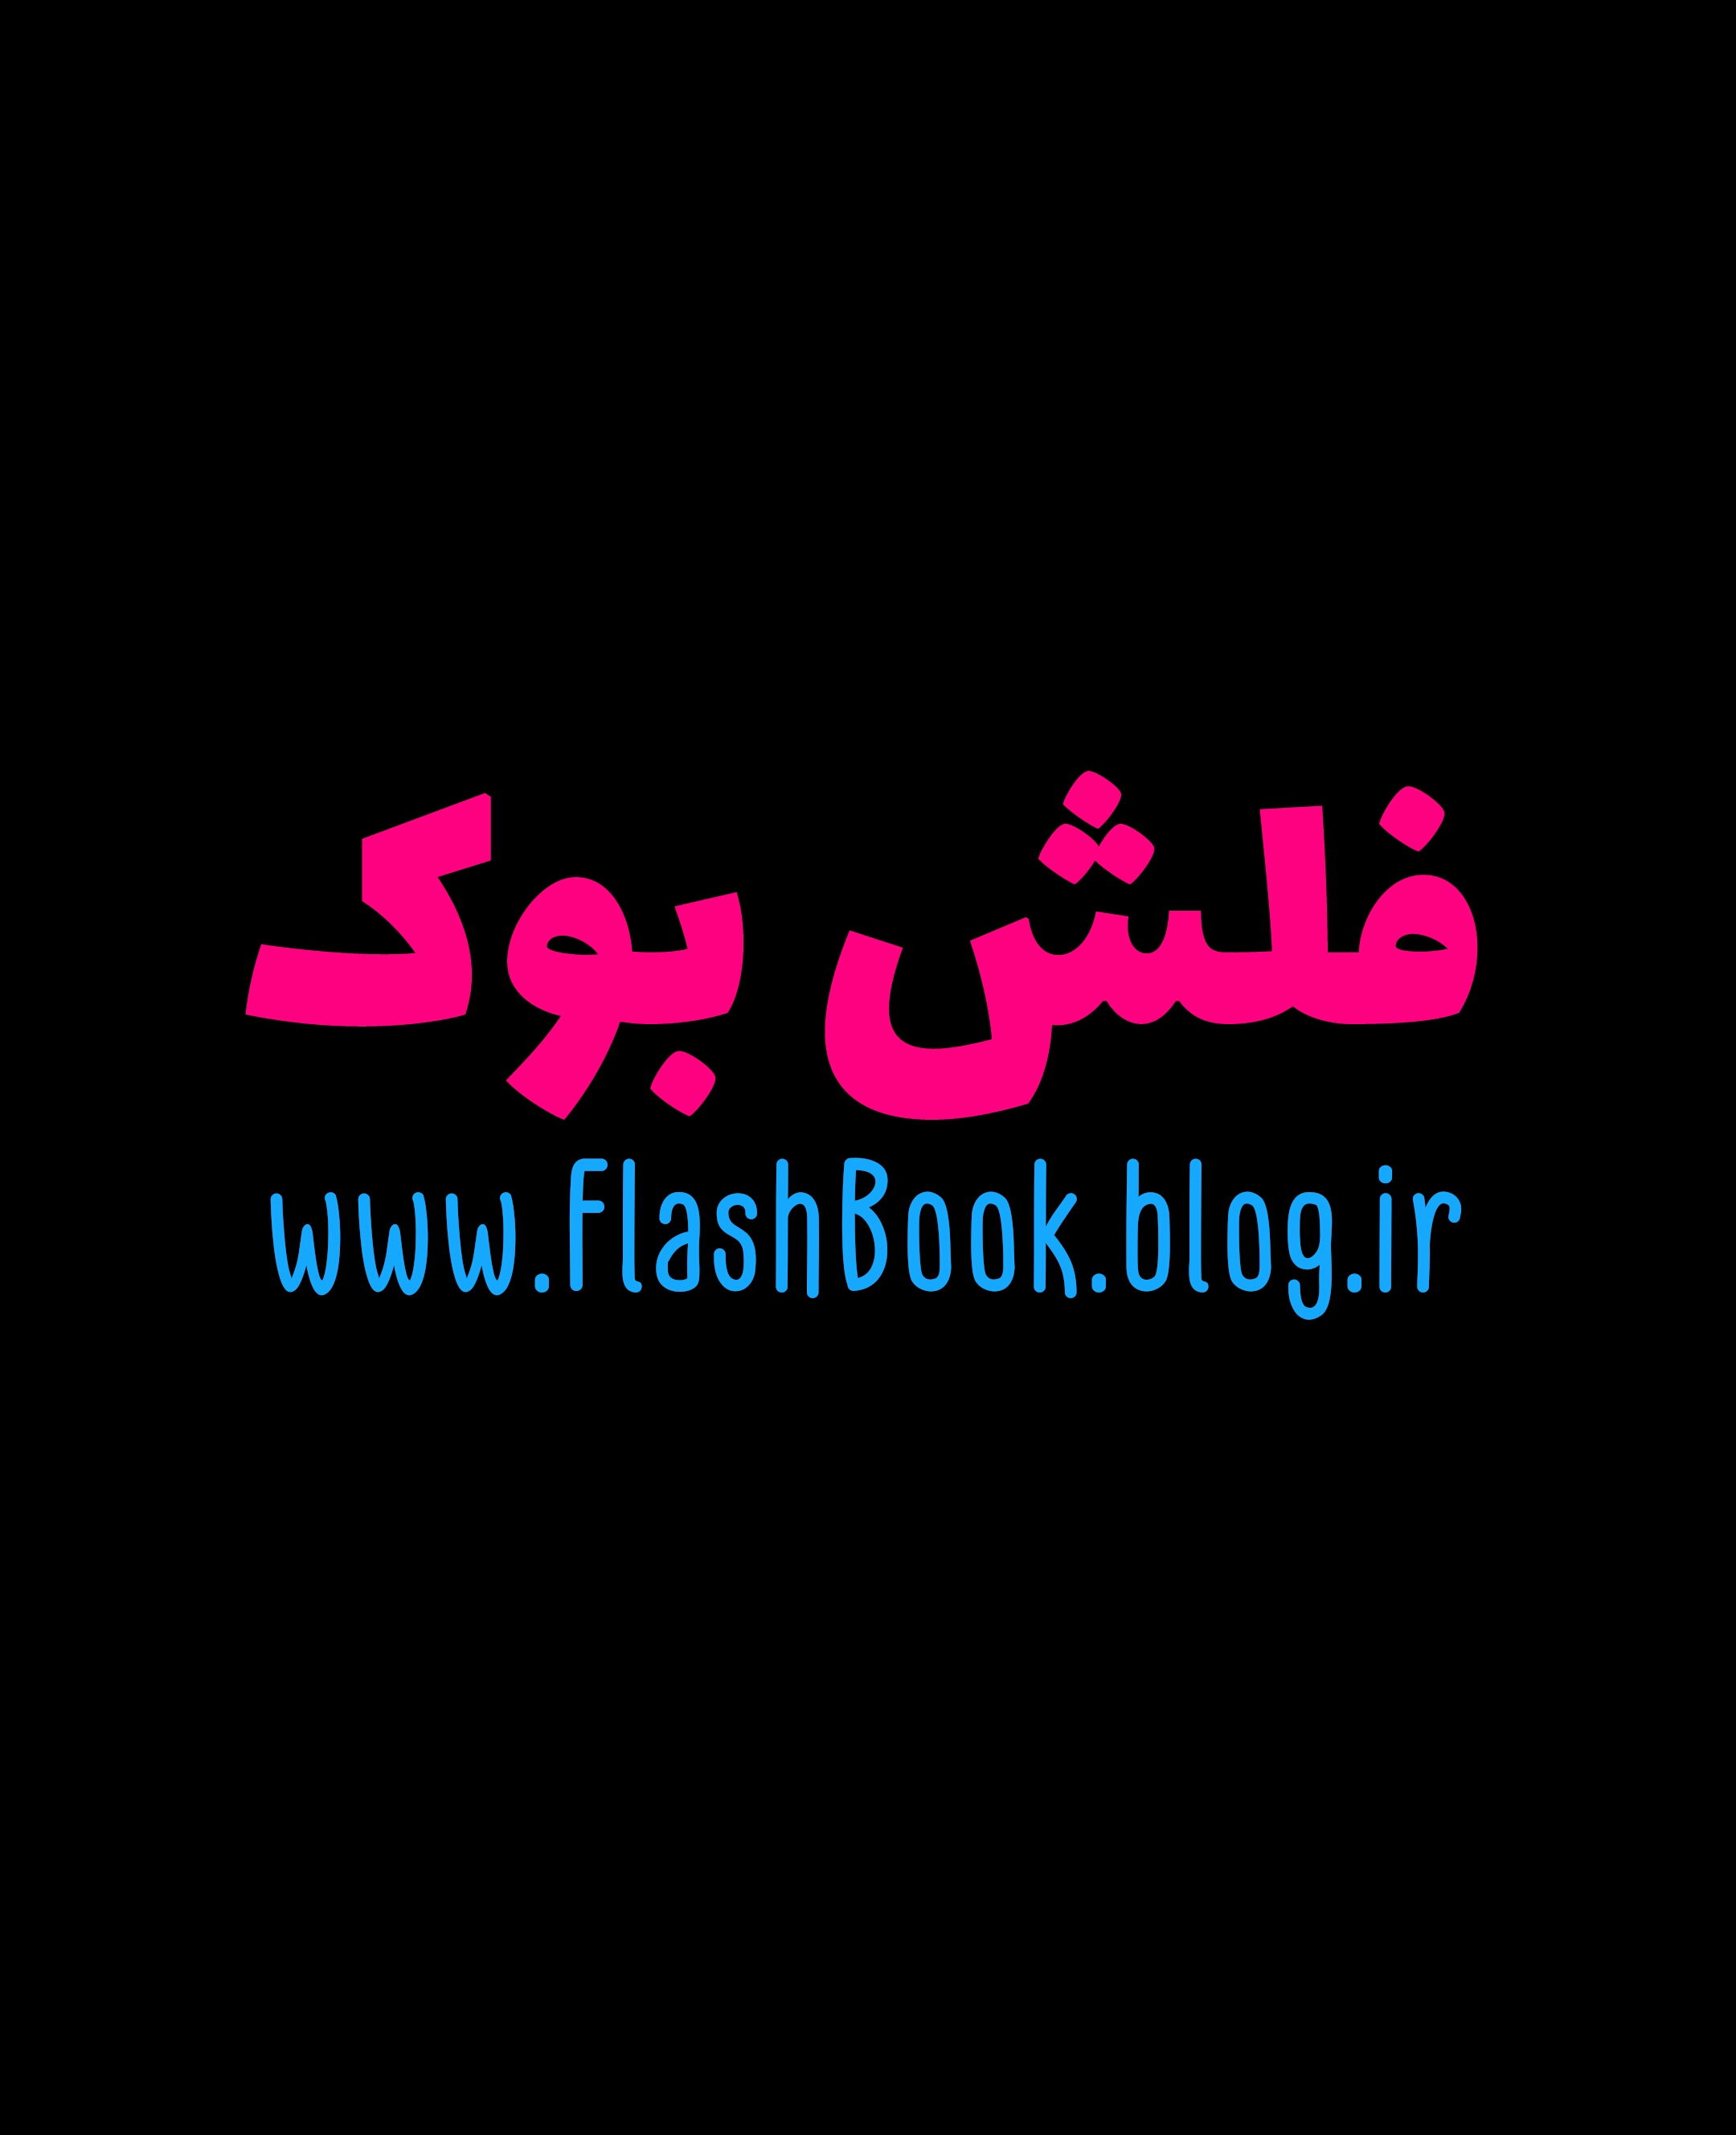 لوگو وبلاگ فلش بوک (2)